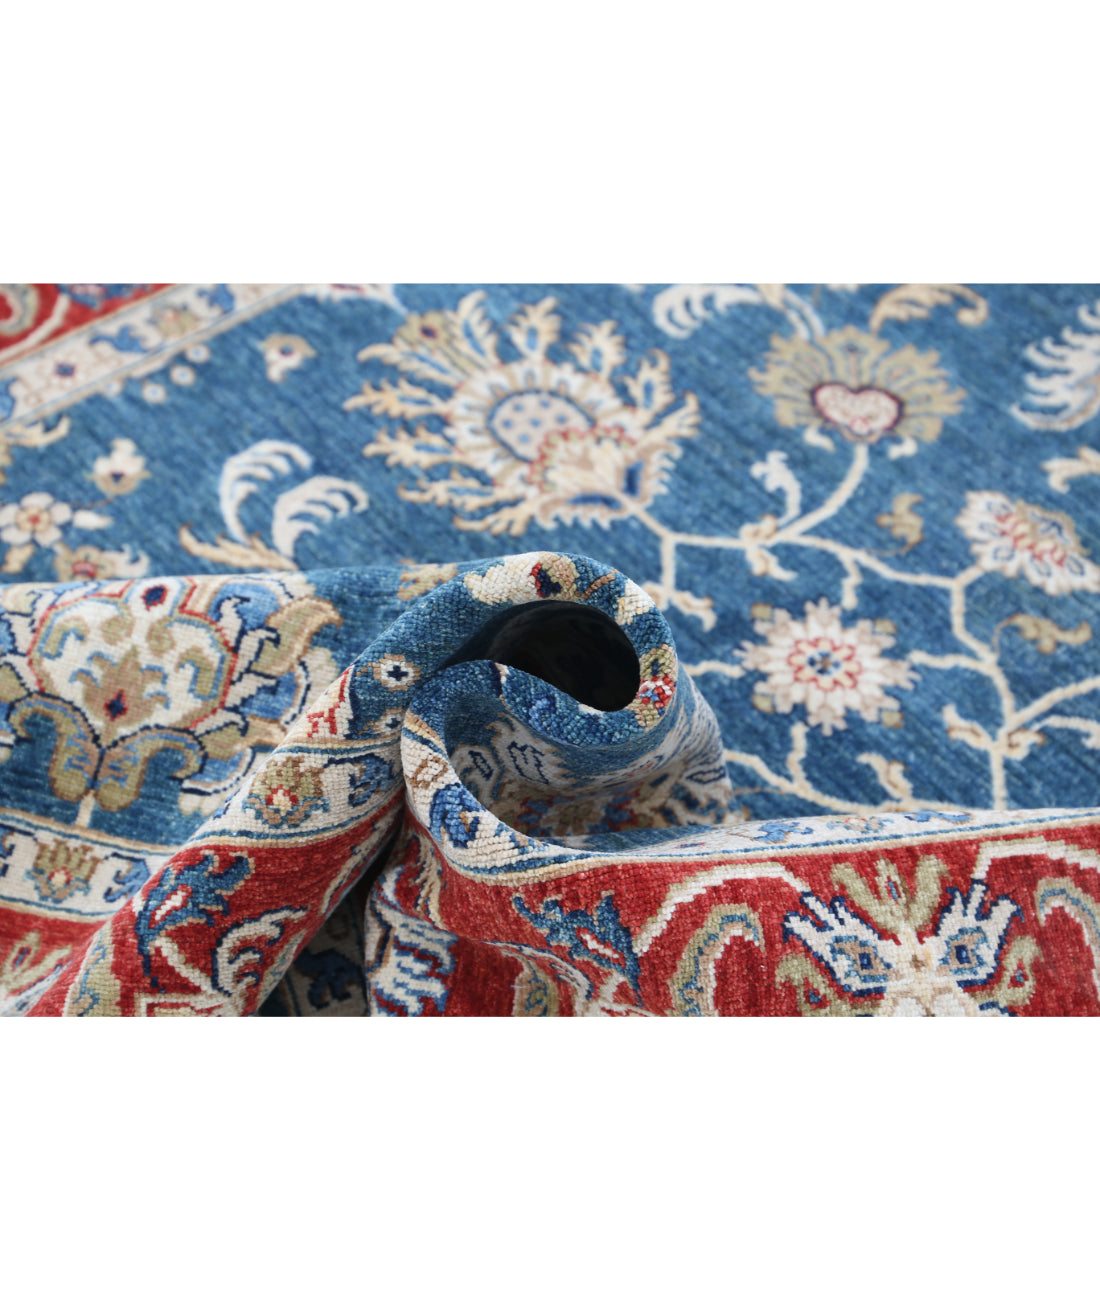 Hand Knotted Ziegler Farhan Wool Rug - 5'10'' x 7'9'' 5'10'' x 7'9'' (175 X 233) / Blue / Red